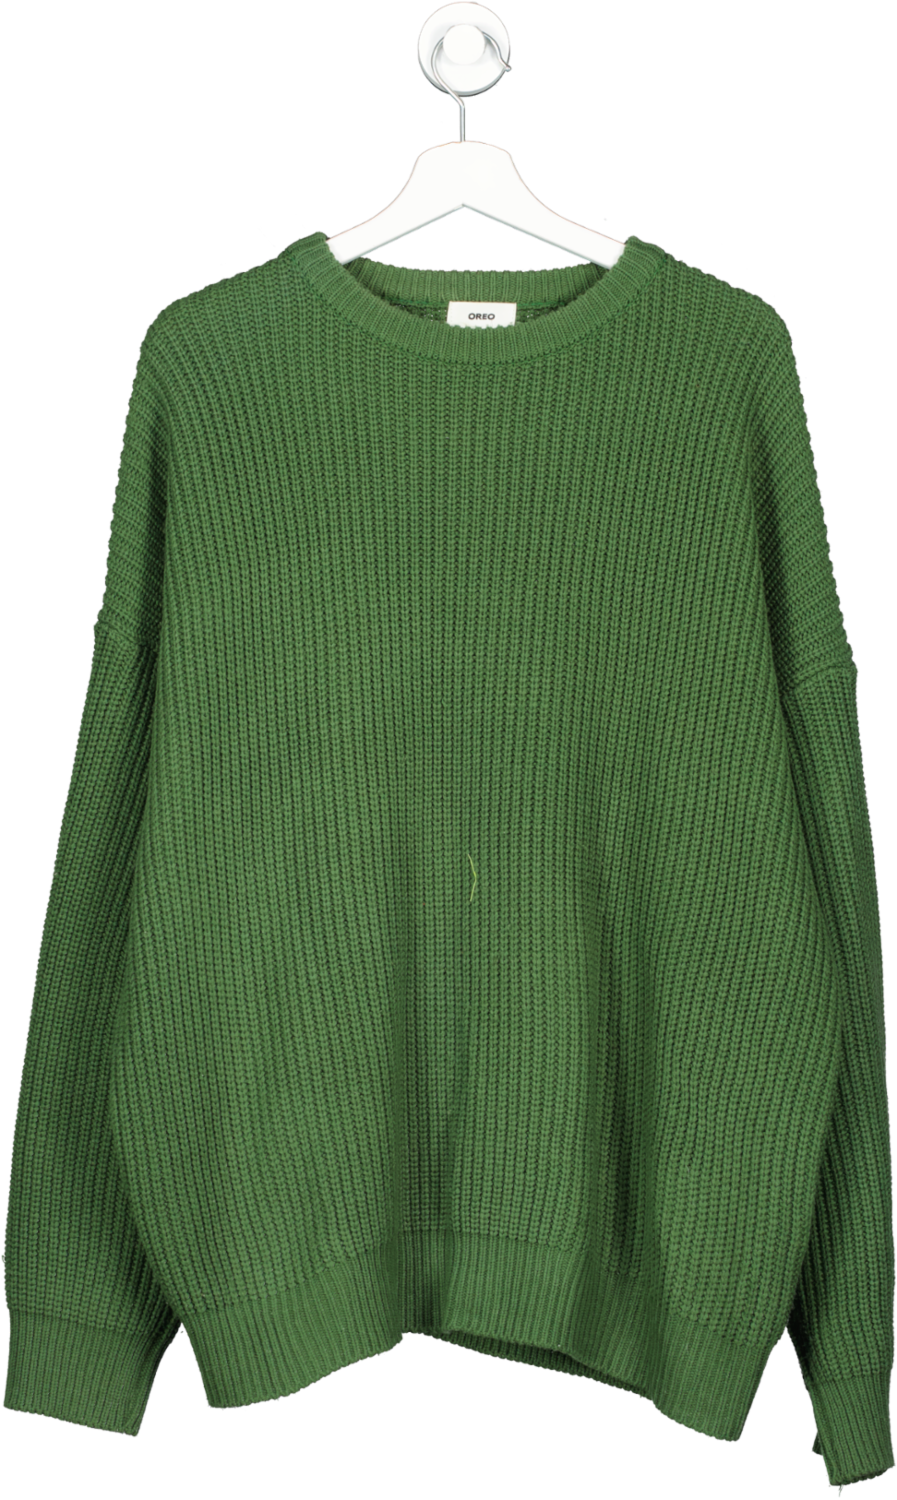 Oreo Green Knitted Crewneck Jumper UK L